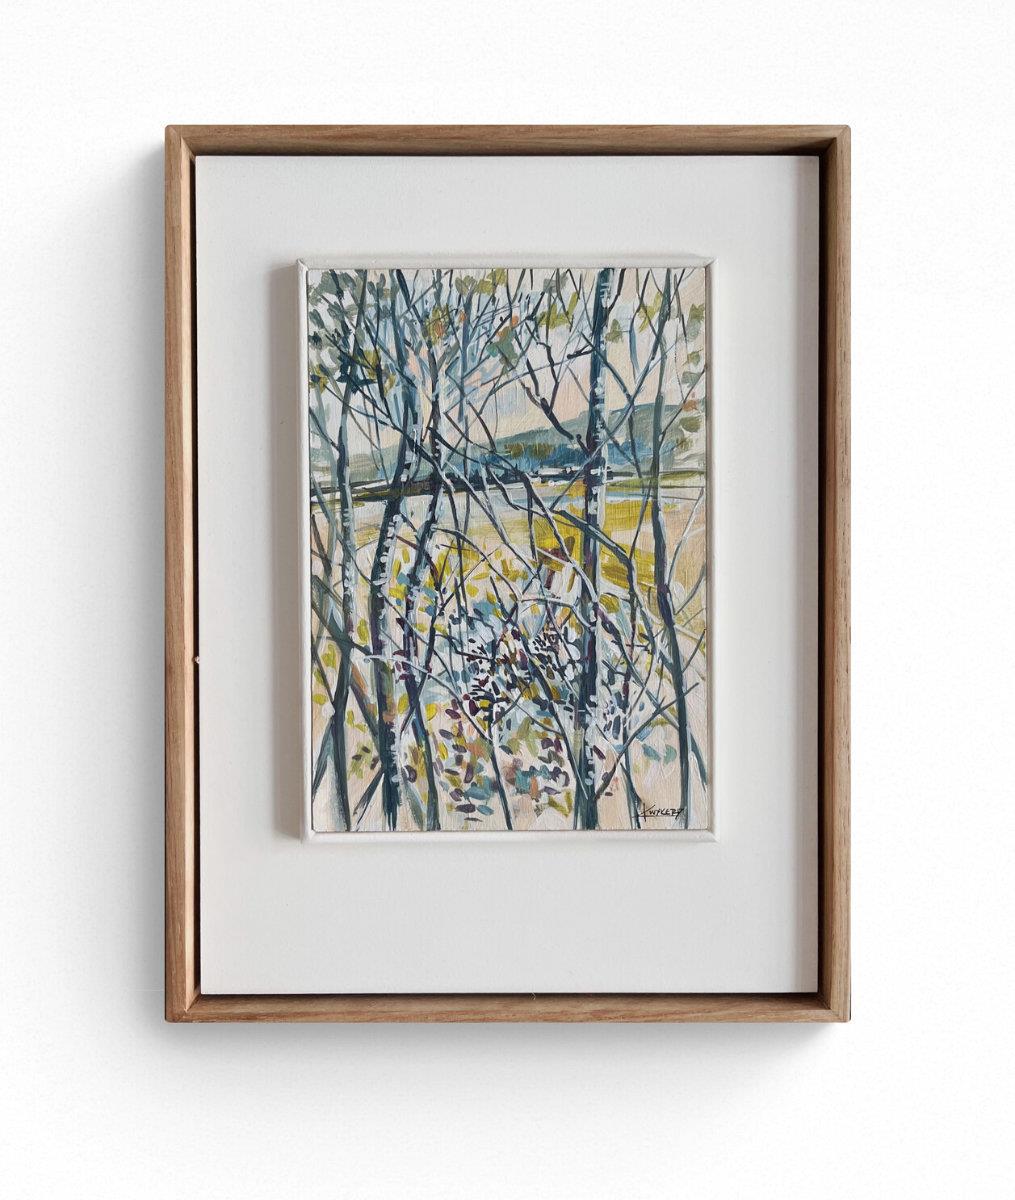 framed impressionist painting of a forest landscape